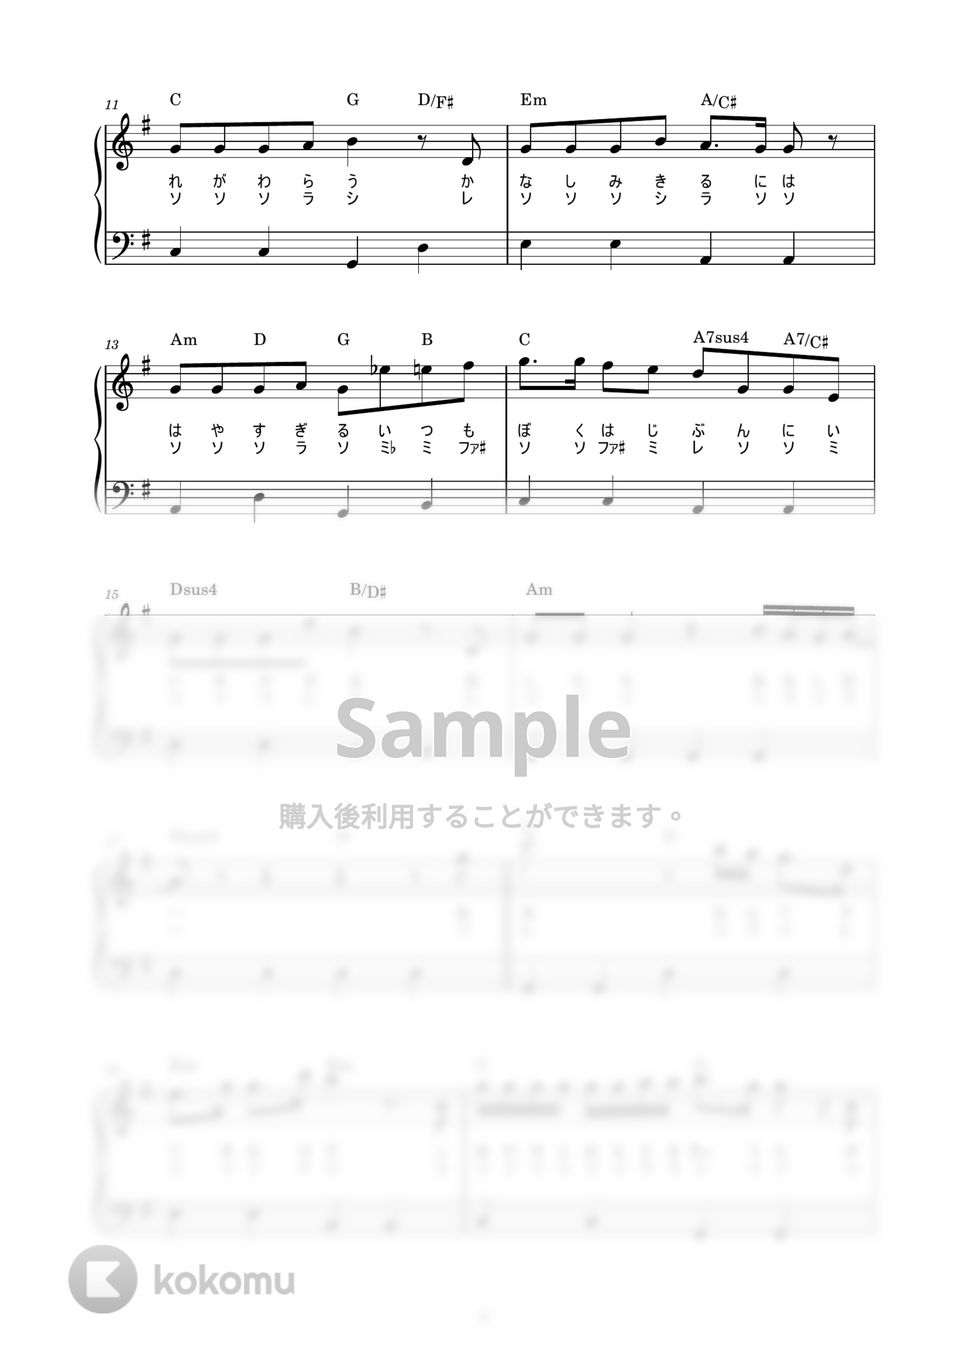 Mrs.GREEN APPLE - 僕のこと (かんたん / 歌詞付き / ドレミ付き / 初心者) by piano.tokyo